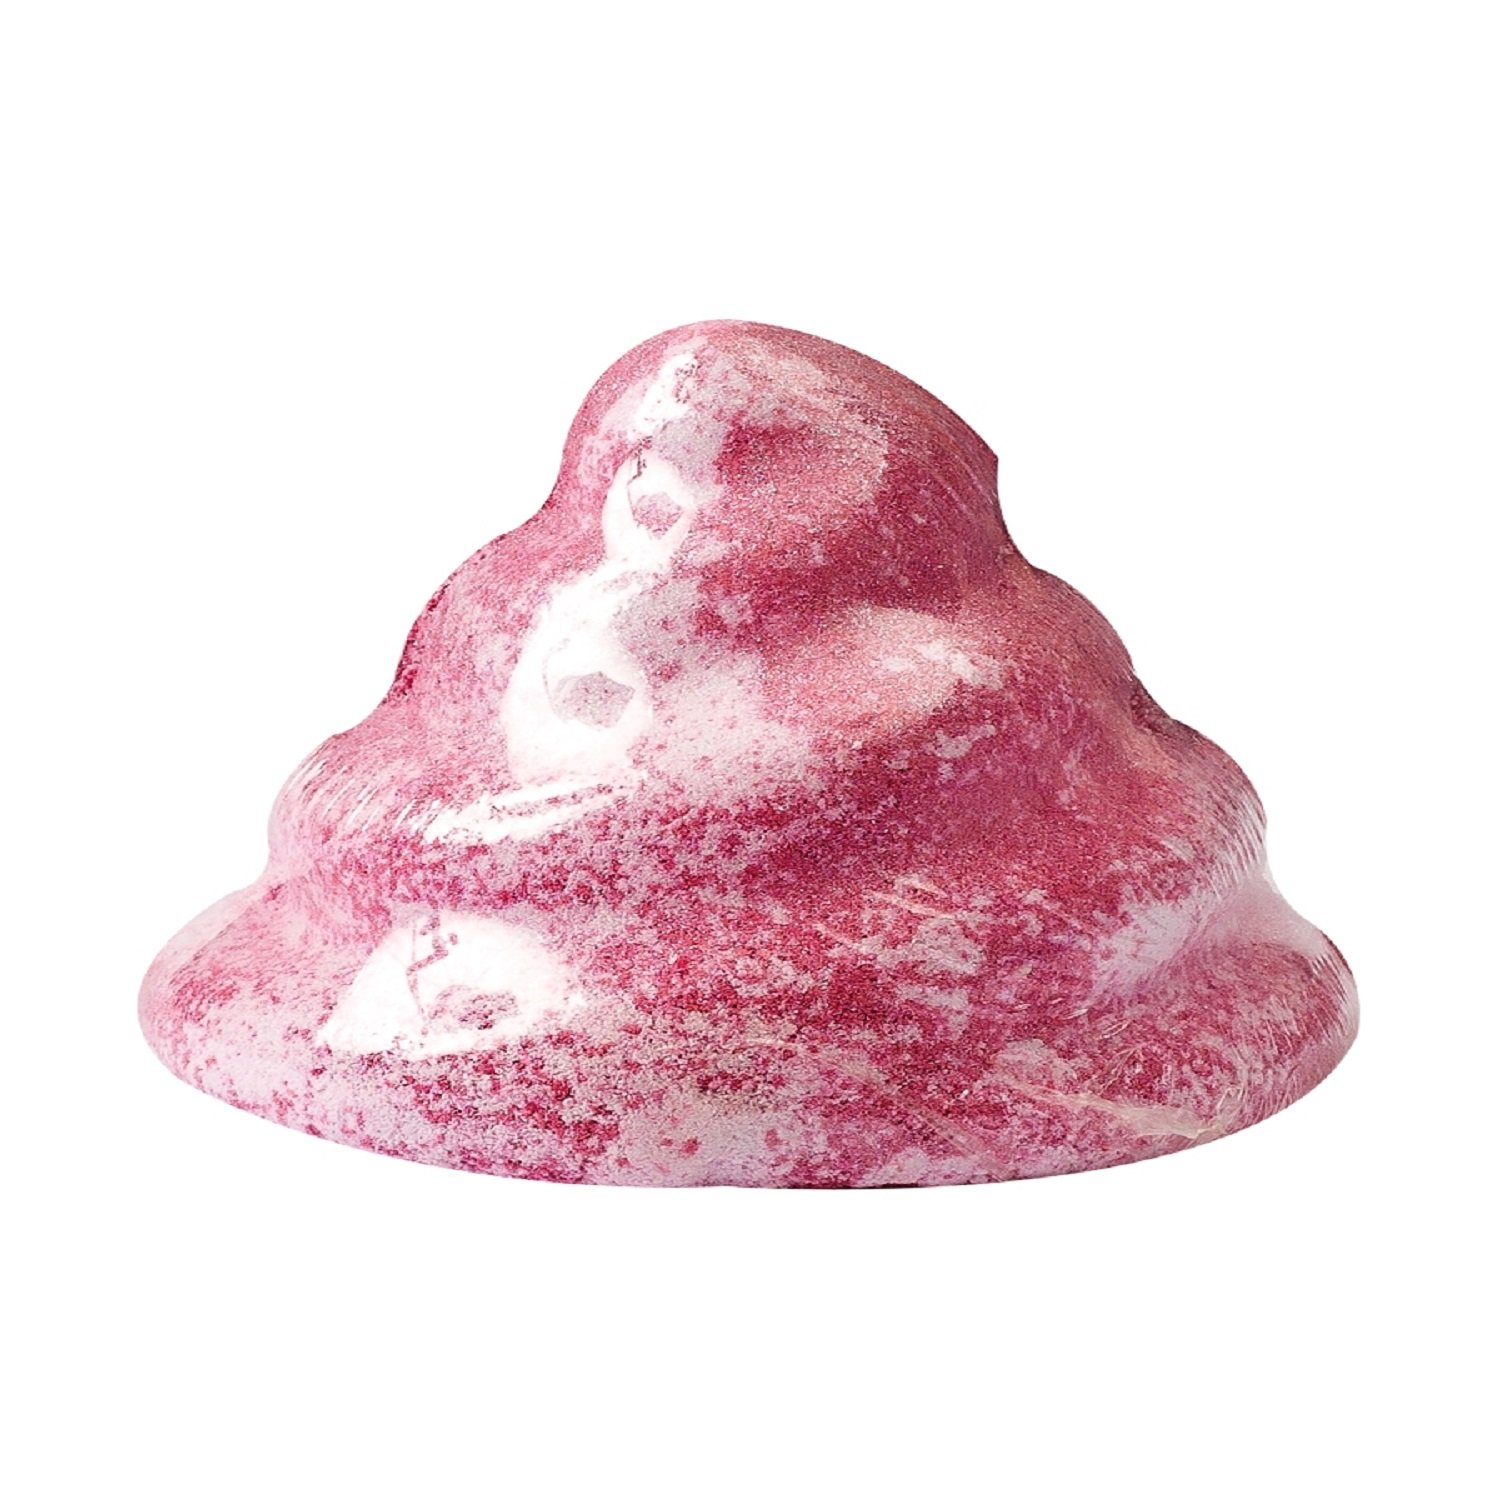 Ароматическая бомбочка для принятия ванны Poopsie Slime Surprise 68-0007-P розовая